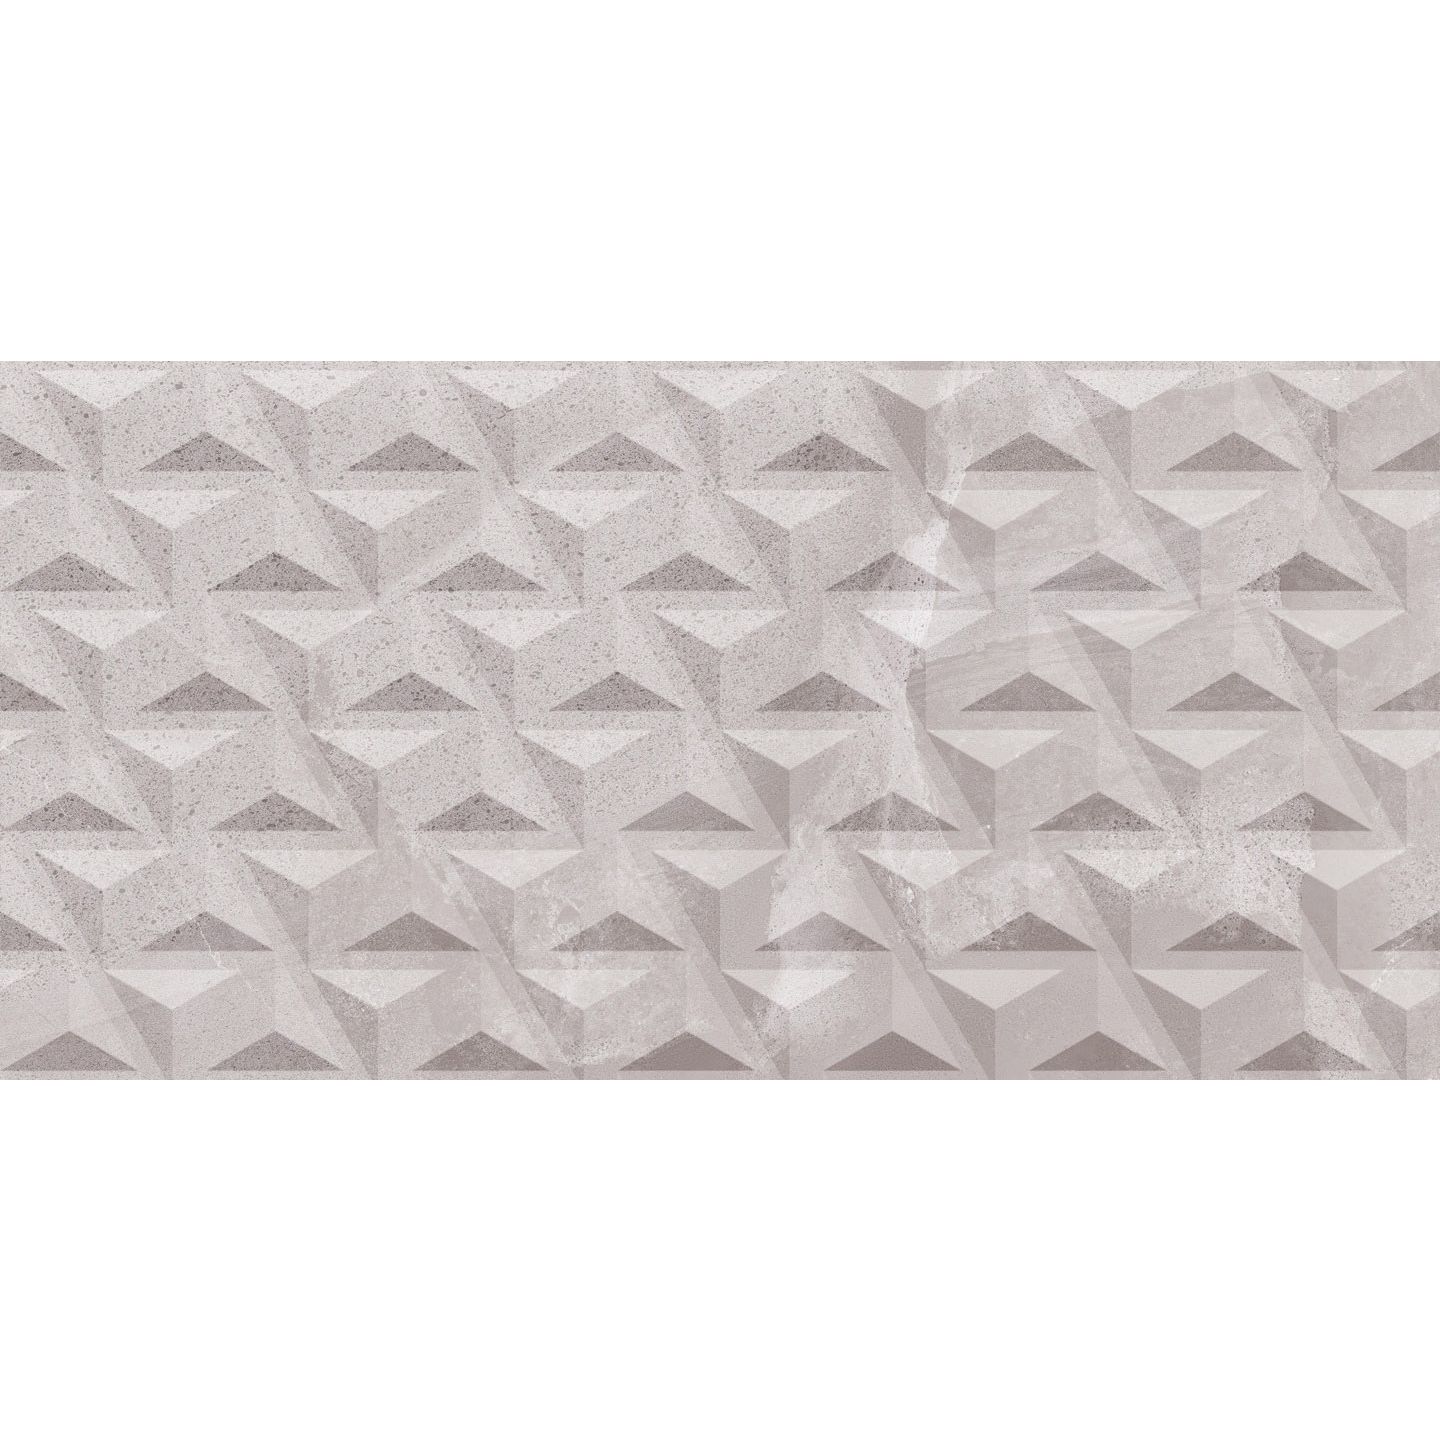 Настенная плитка Cube Ceramica Iron Stone Gris HL 02 30x60 см